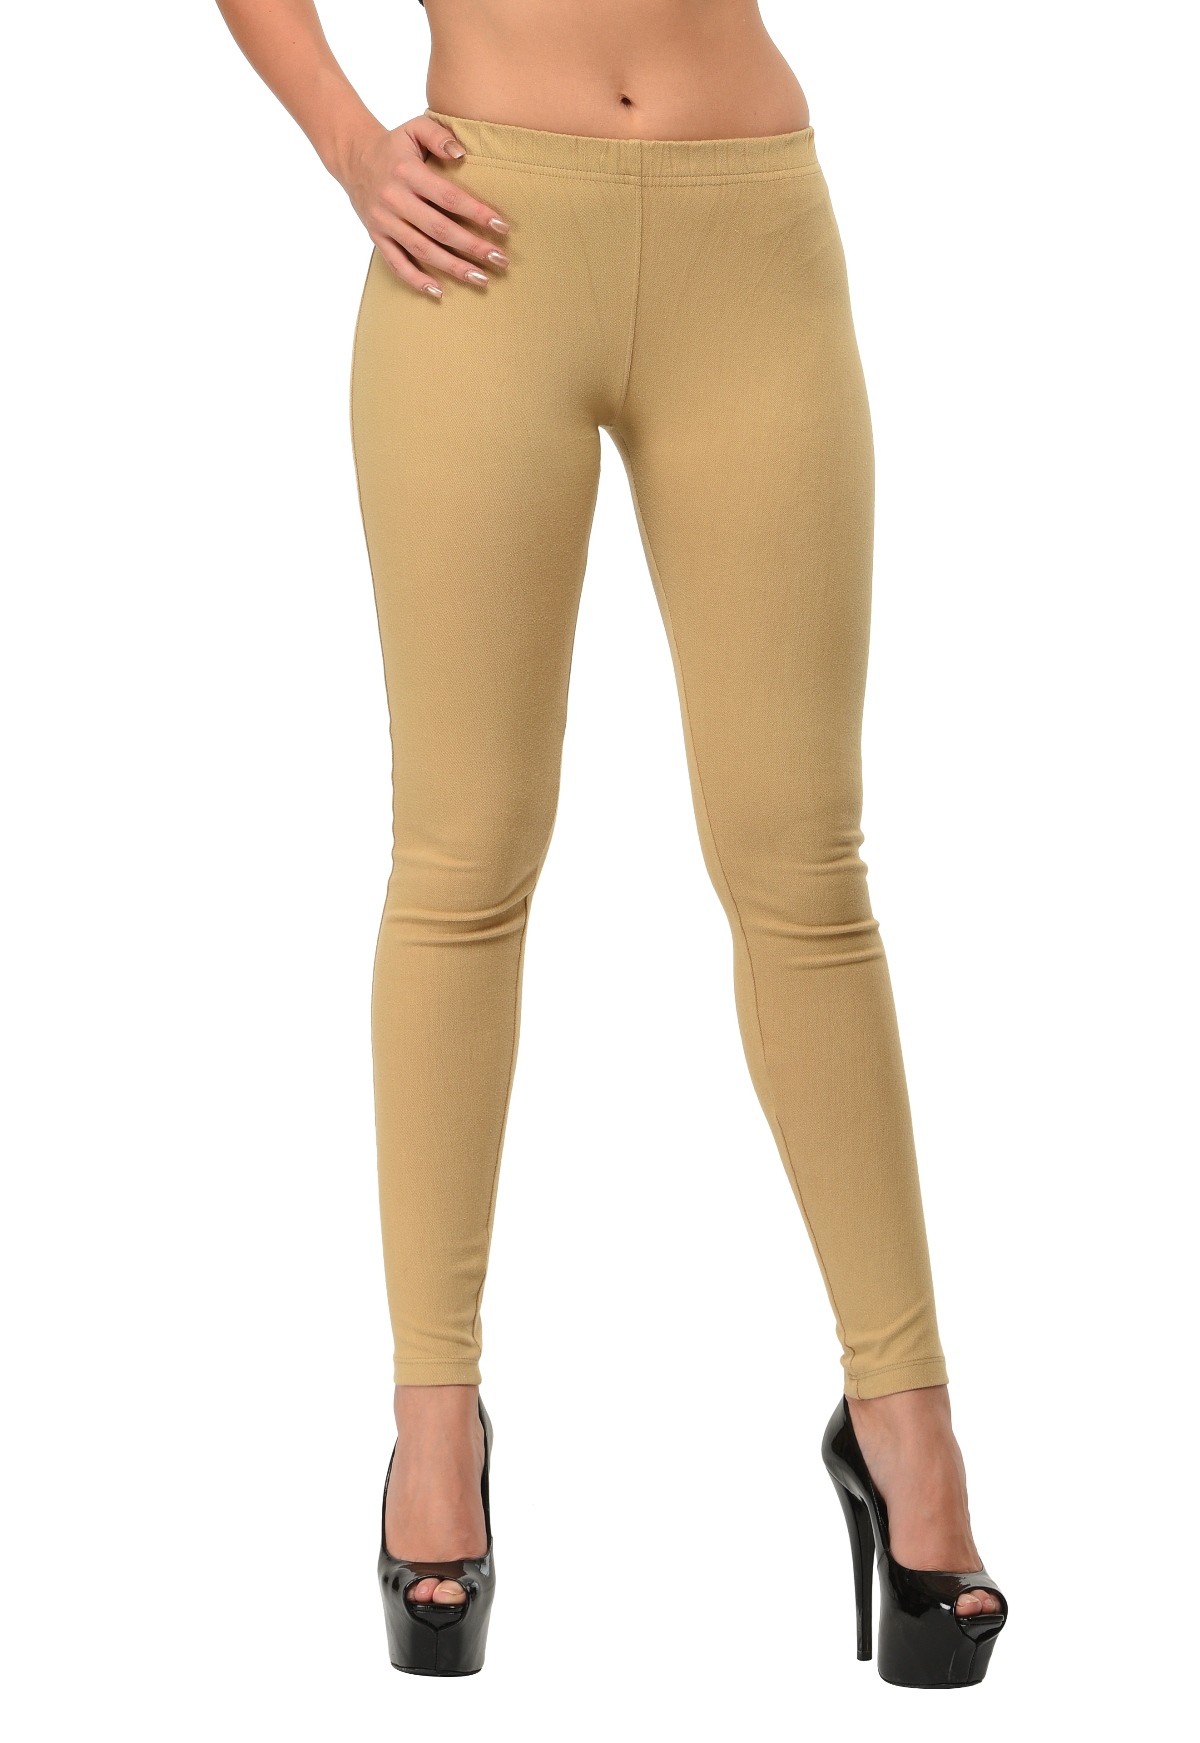 Cotton-blend leggings - Dark beige - Ladies | H&M